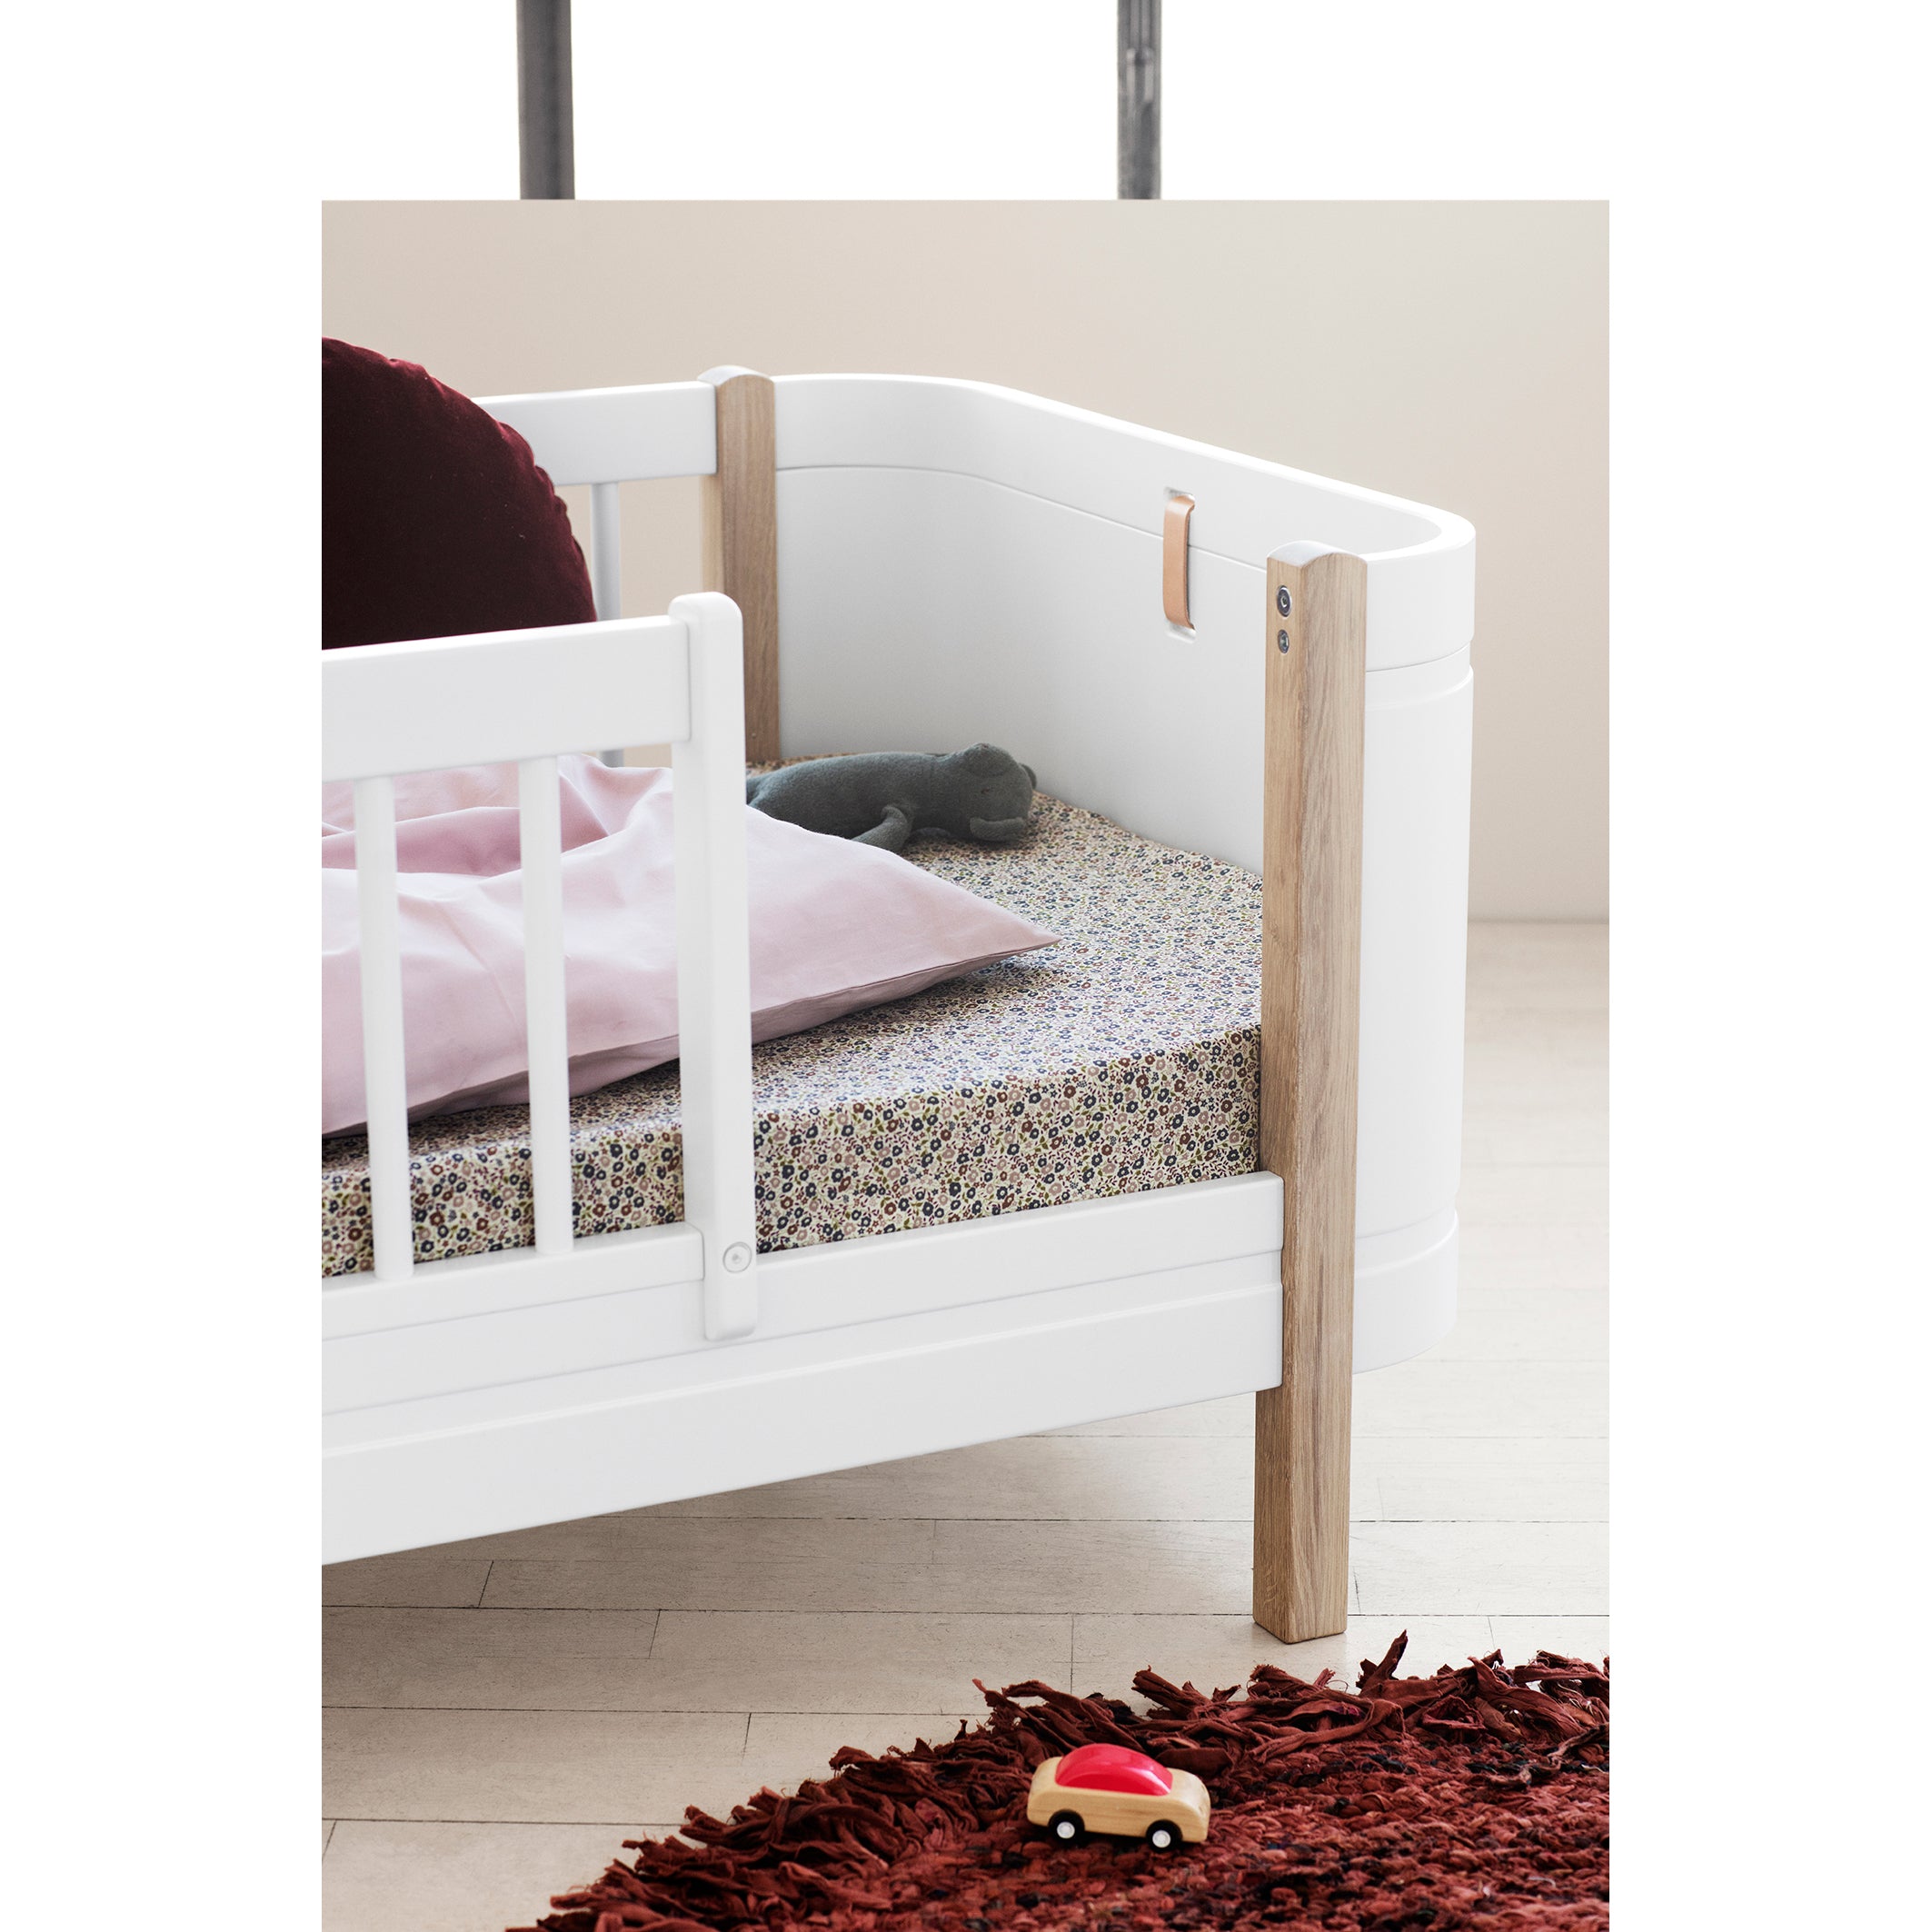 Oliver Furniture Wood Mini+ 嬰兒床 白色配橡木色